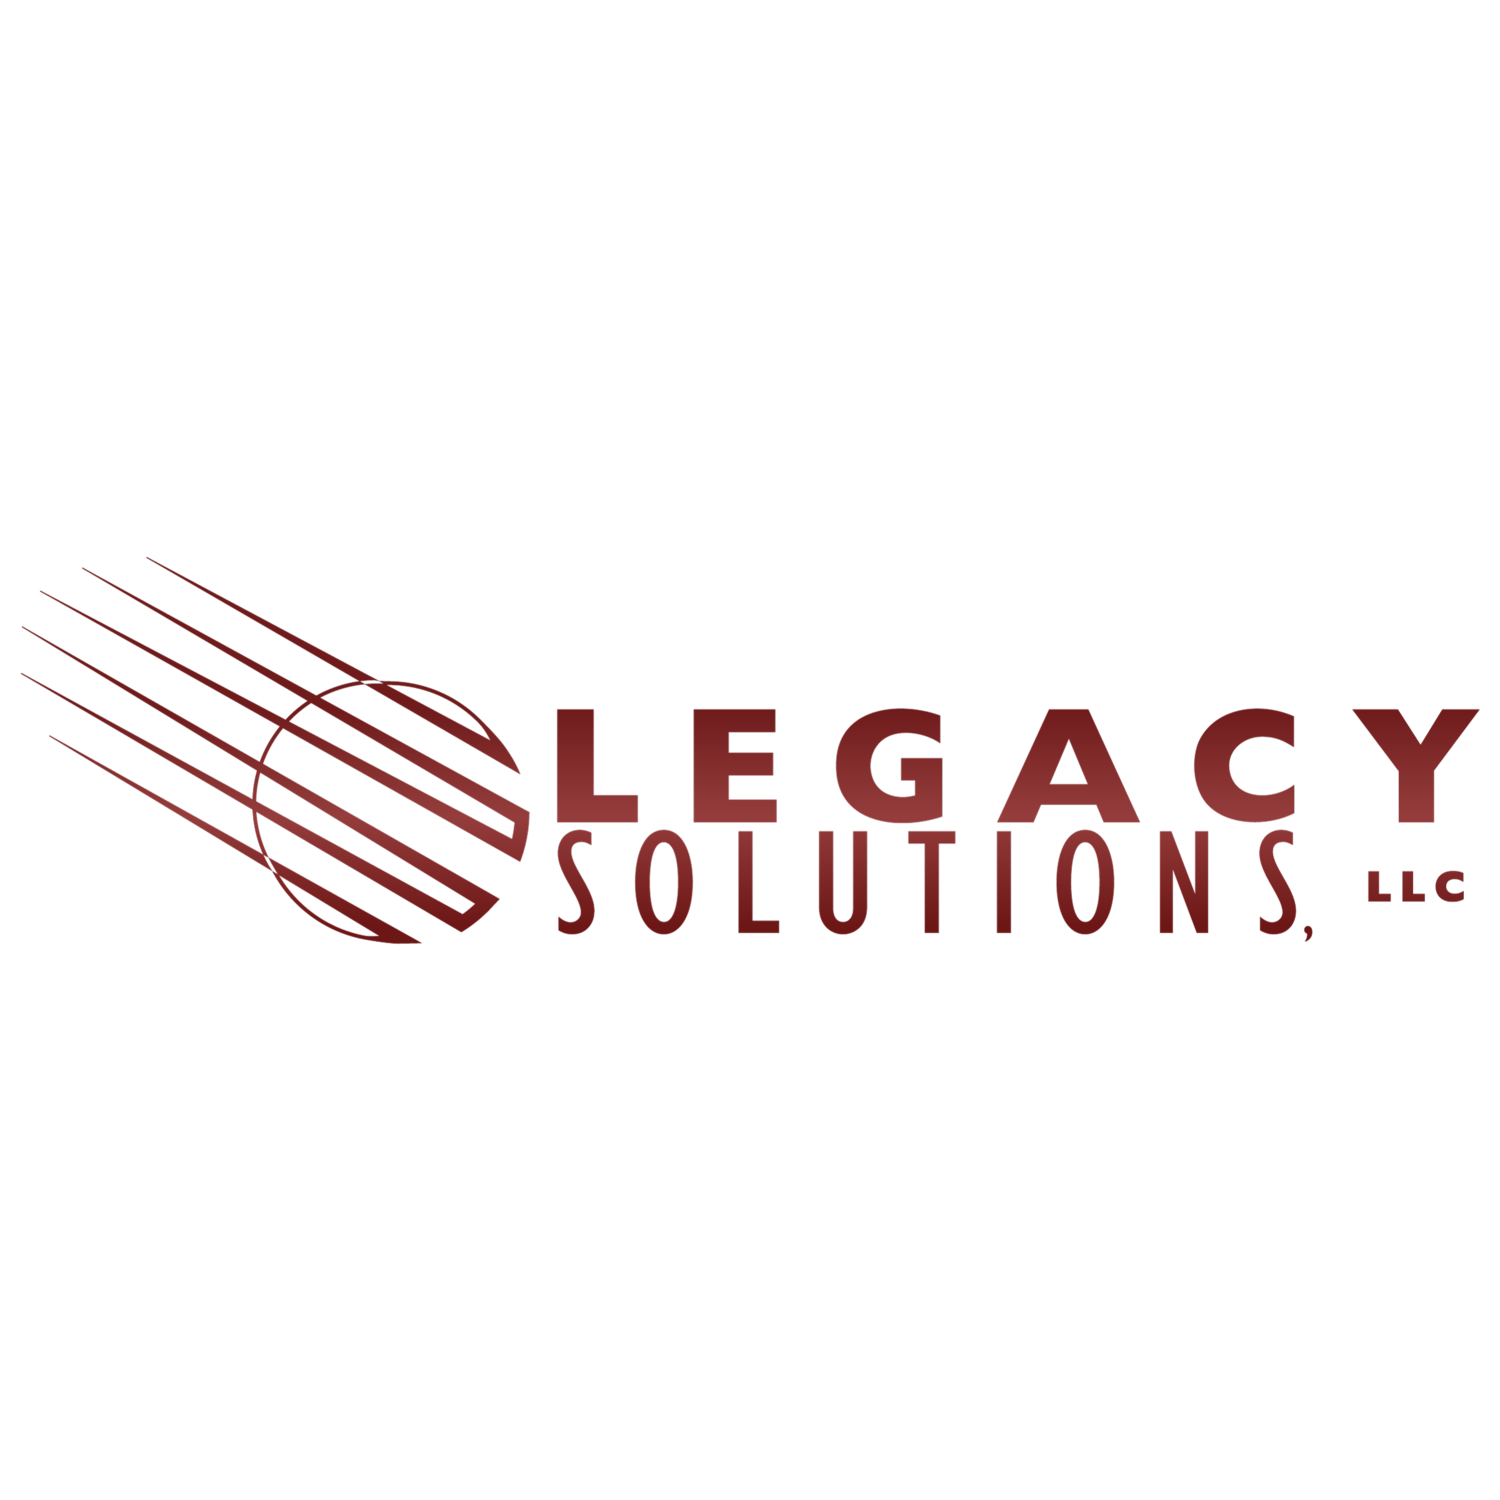 Legacy Solutions, LLC